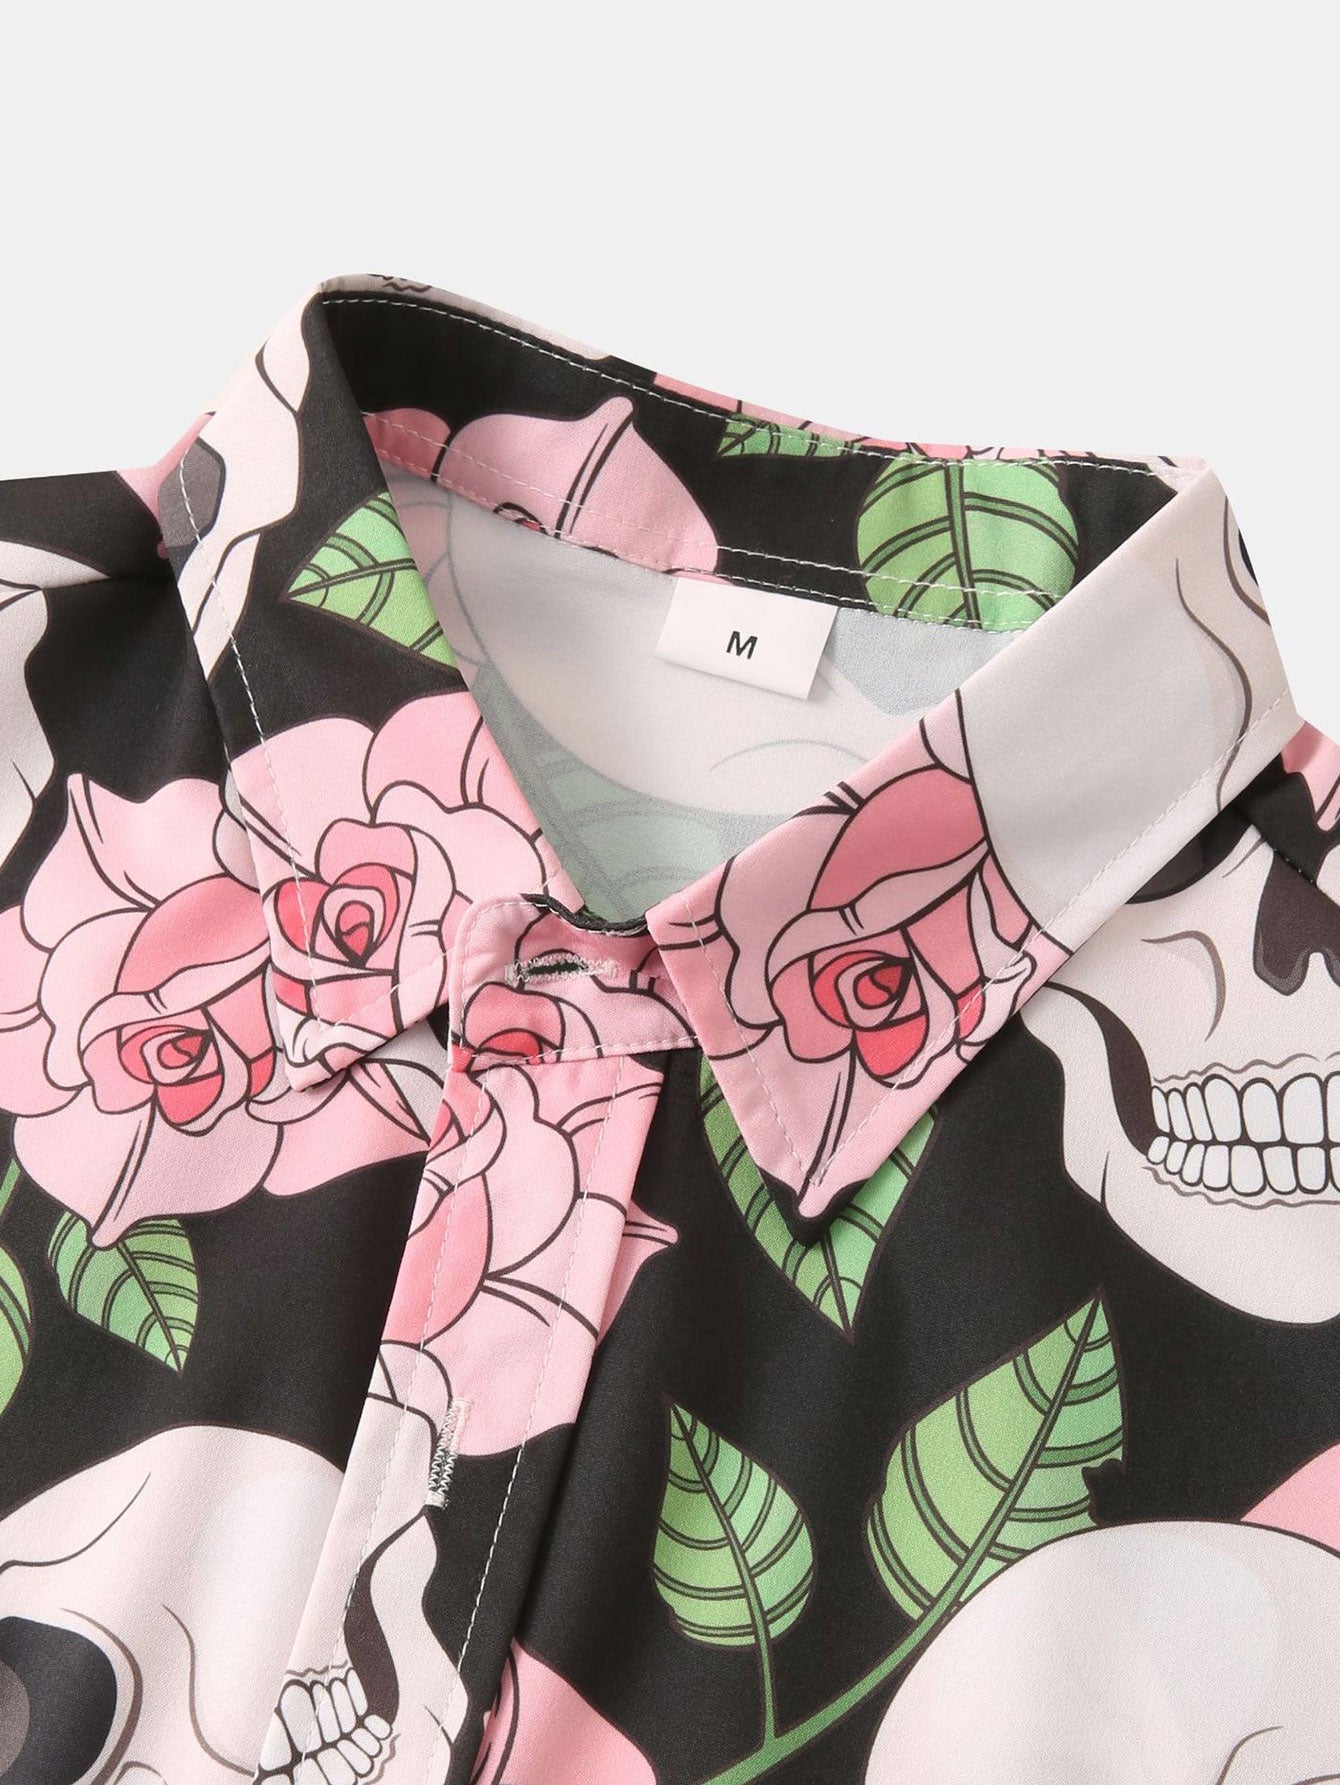 Skull Rose Print Button Up Shirt